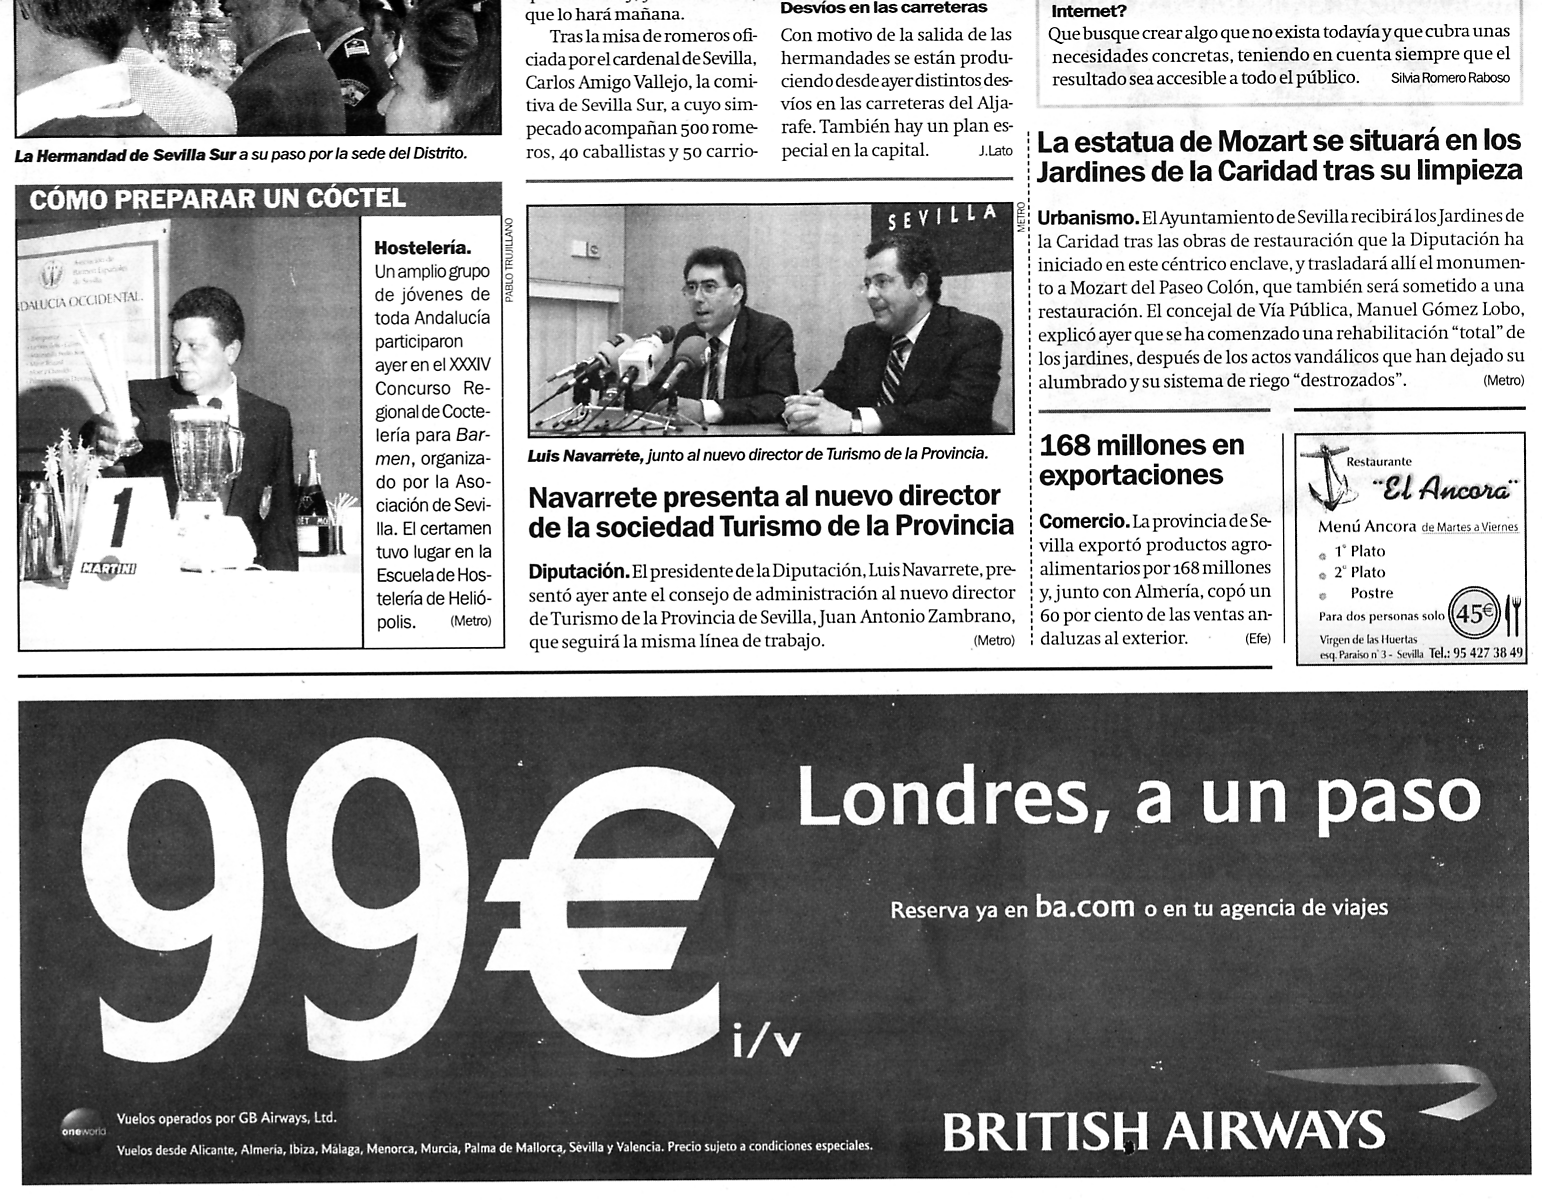 Metro News Sevilla (26-05-2004) (24-05-2004) (B) / Pulse Aqu para Visitar su Web